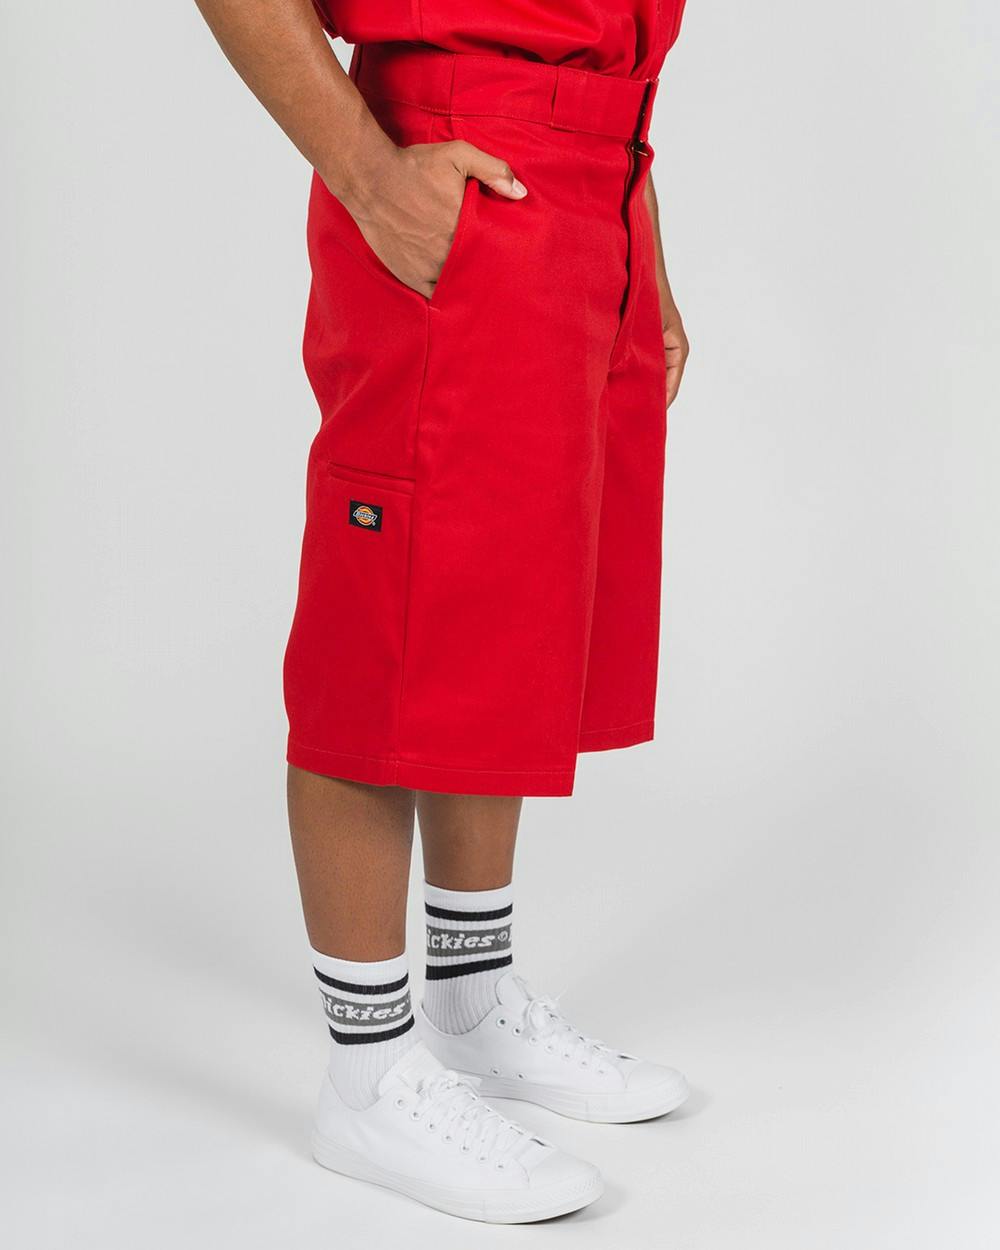 74％以上節約 Dickies red short pants kids-nurie.com